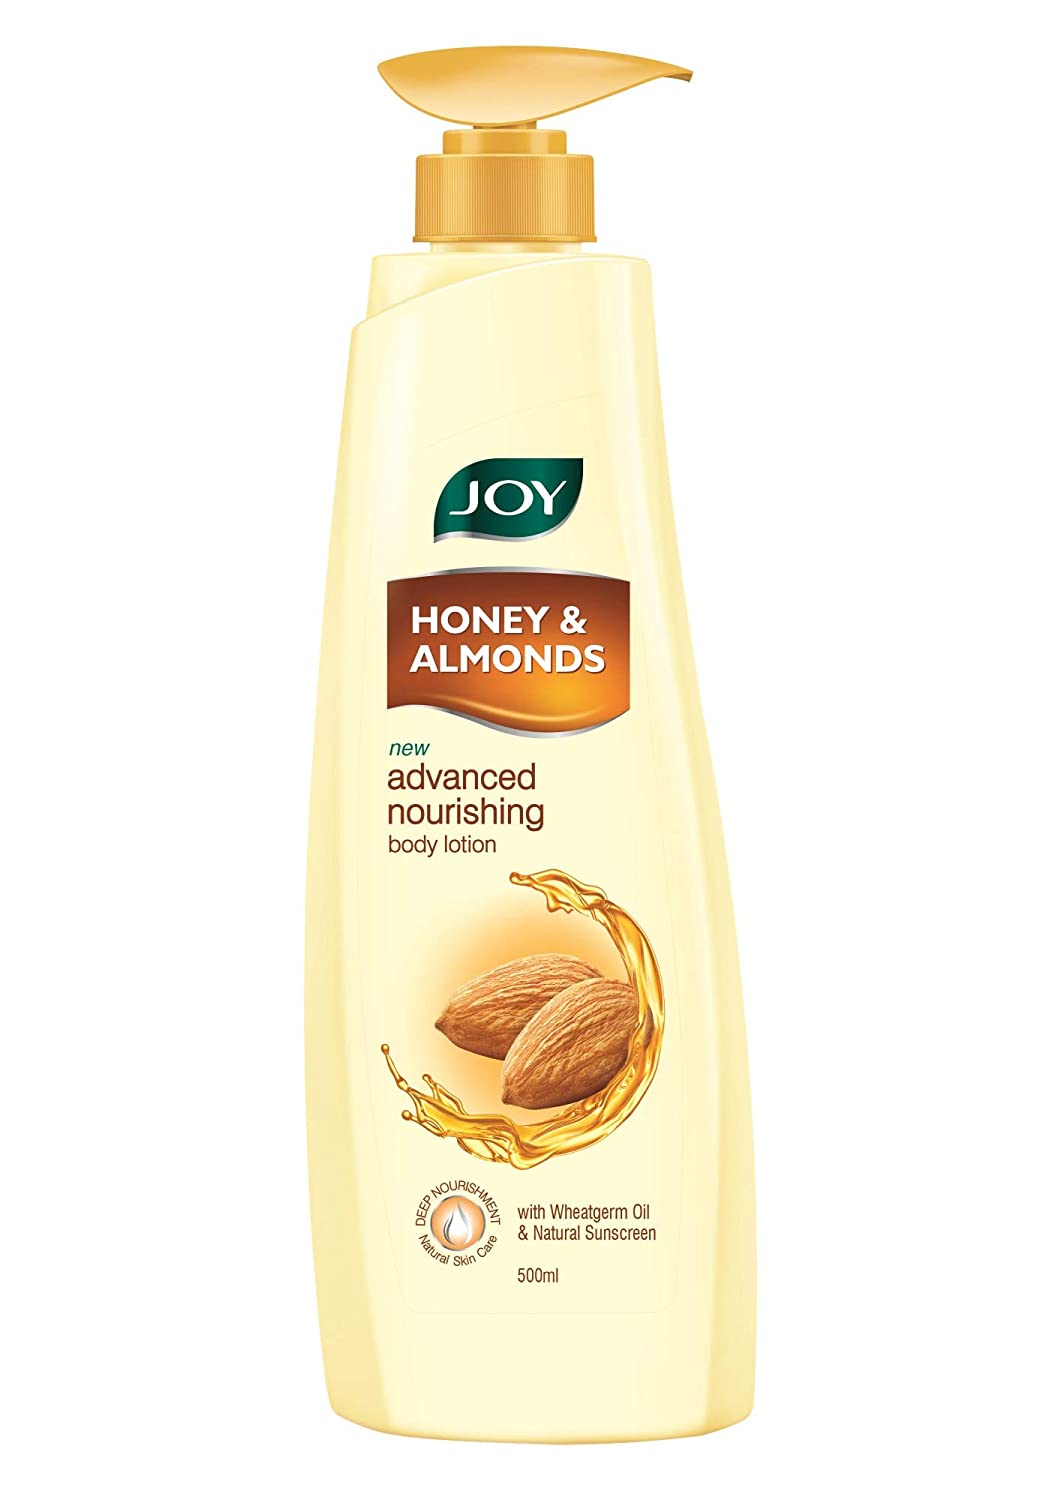 Joy Honey & Almonds Ultimate Nourishing Body Lotion For Extremely Dry Skin - 500ml, body lotion